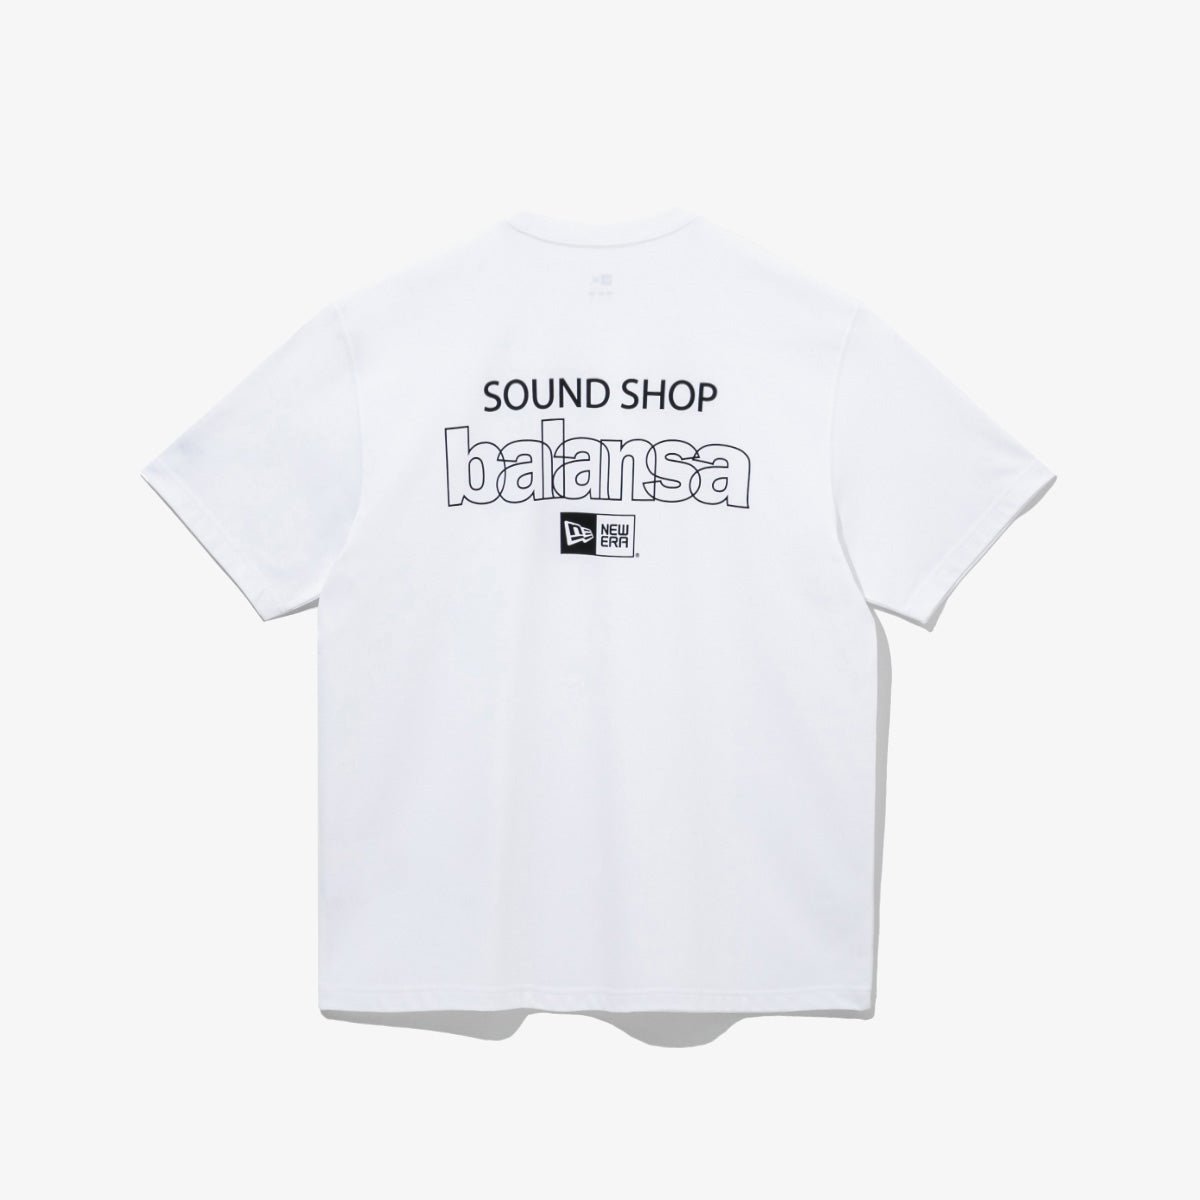 SOUND SHOP balansa 渋谷 限定ロンT - Tシャツ